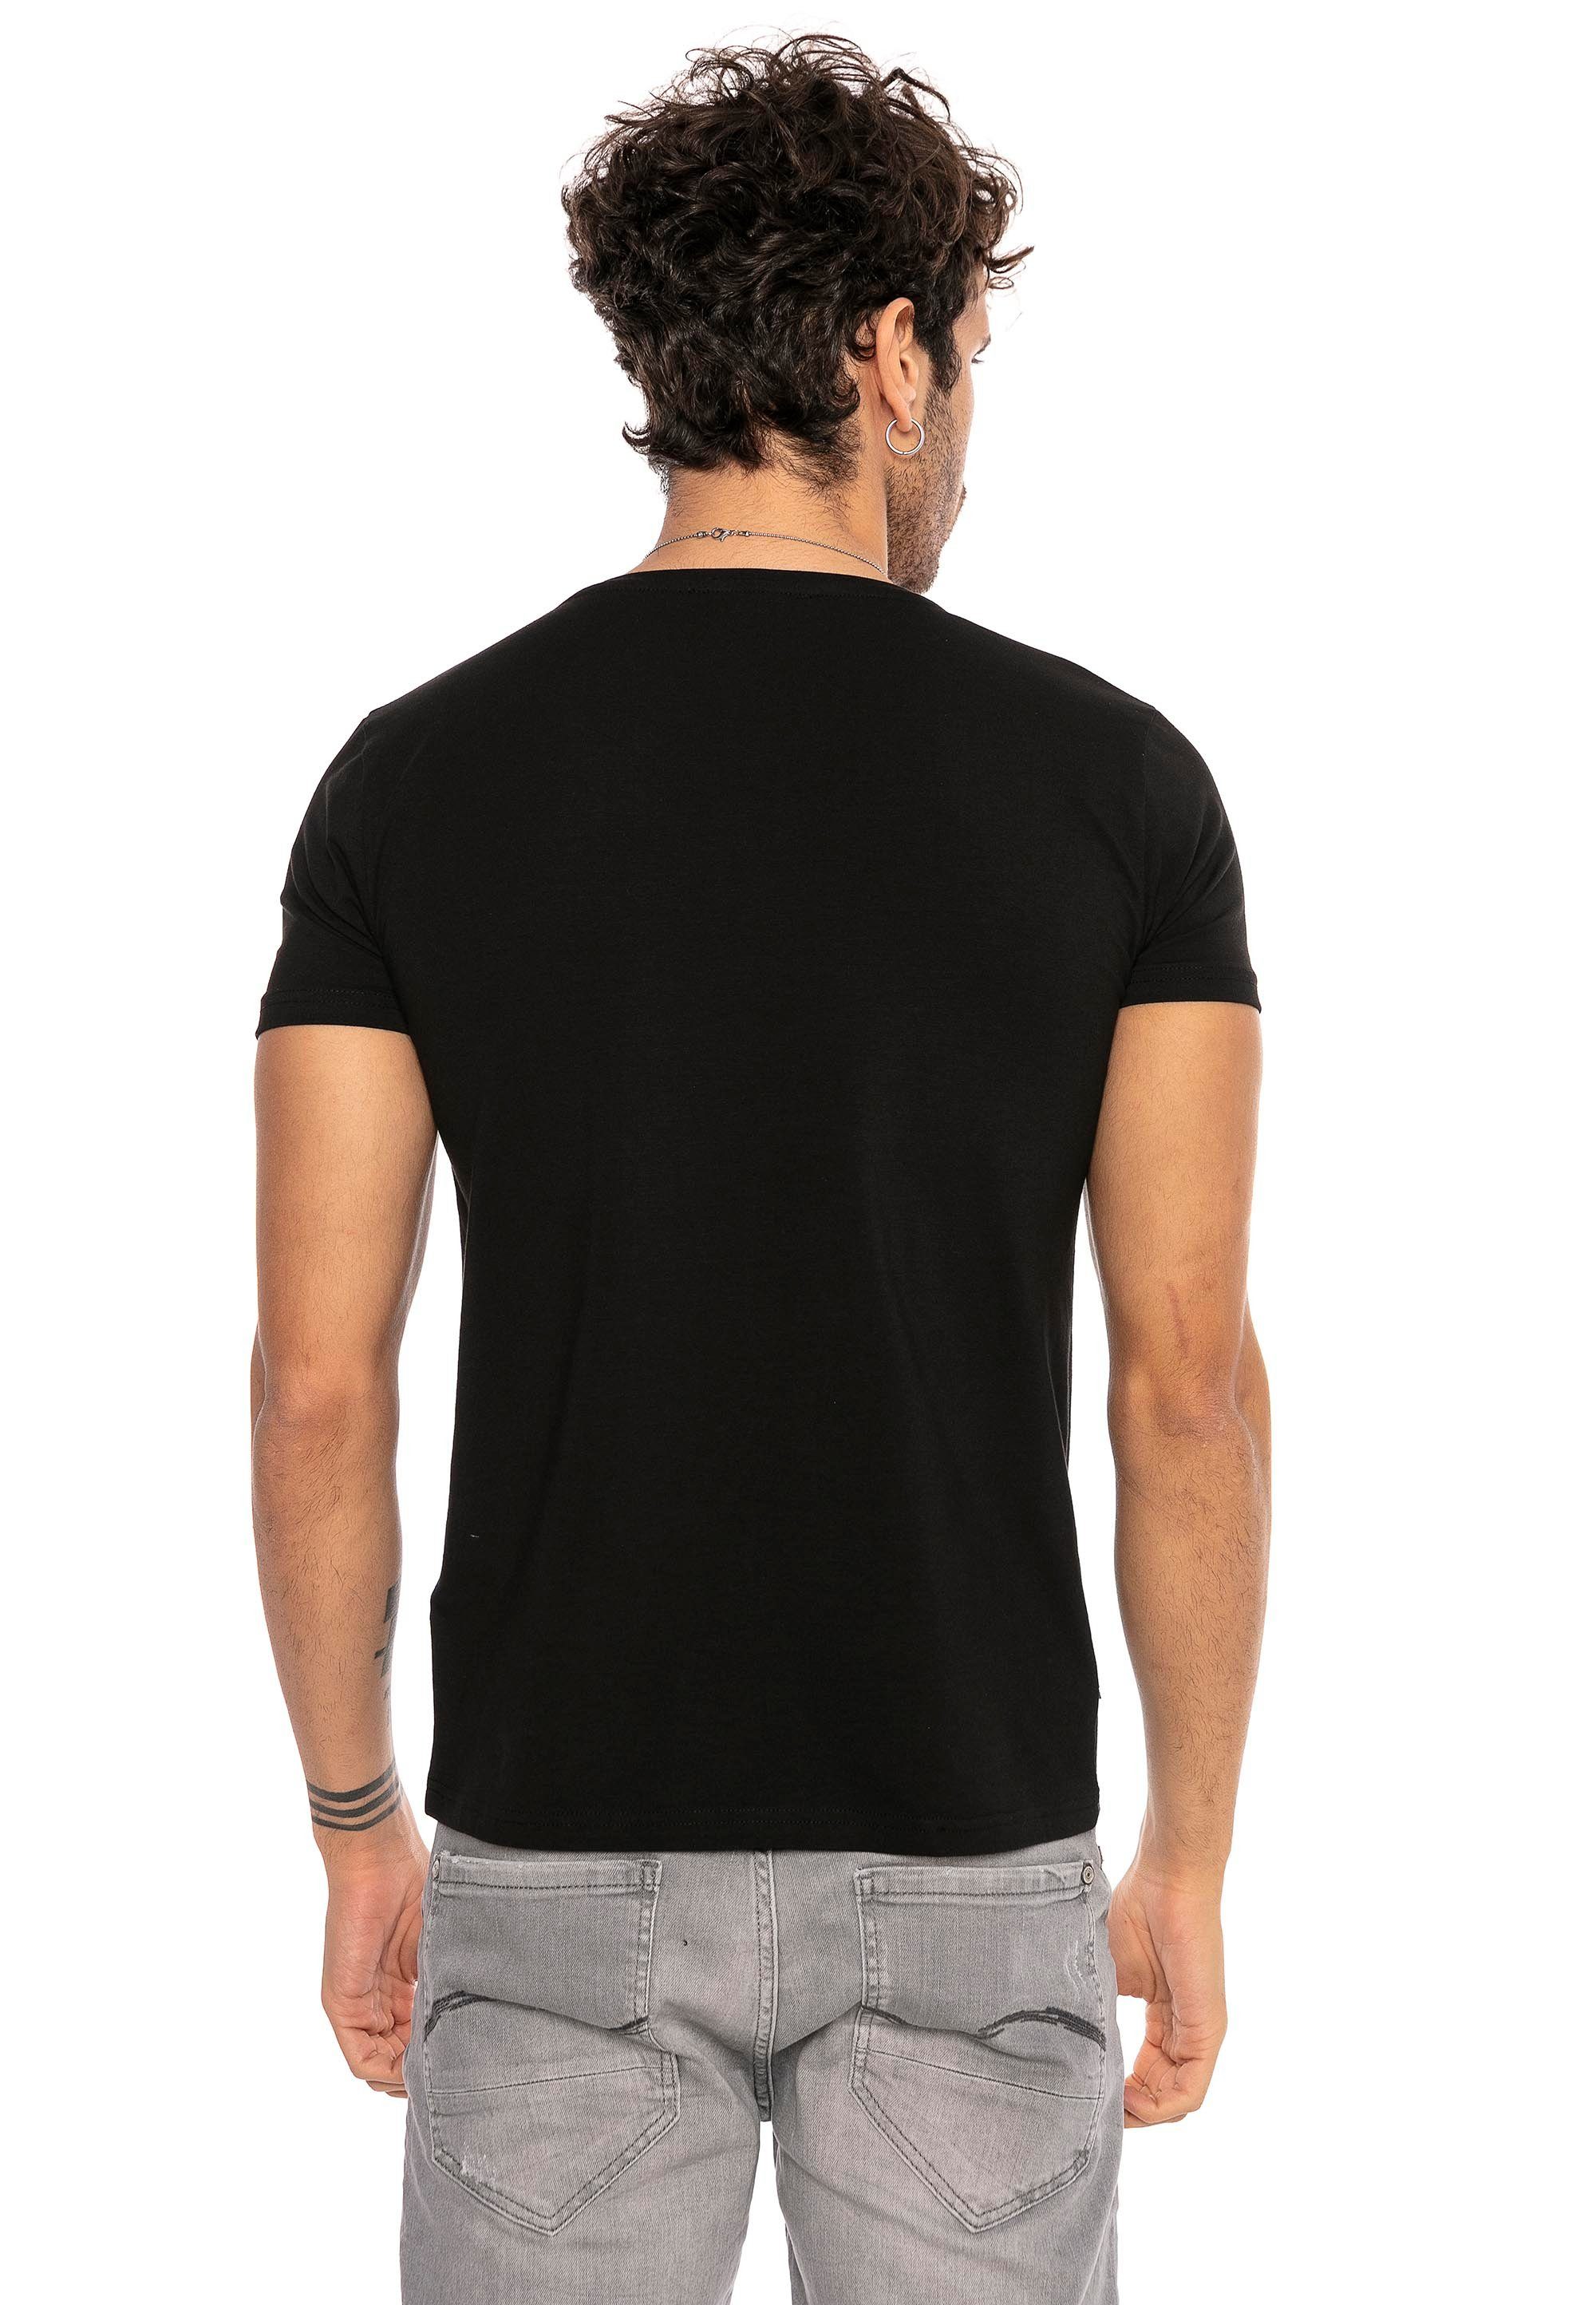 Fullerton aus Logopatch T-Shirt schwarz mit Metall basic RedBridge